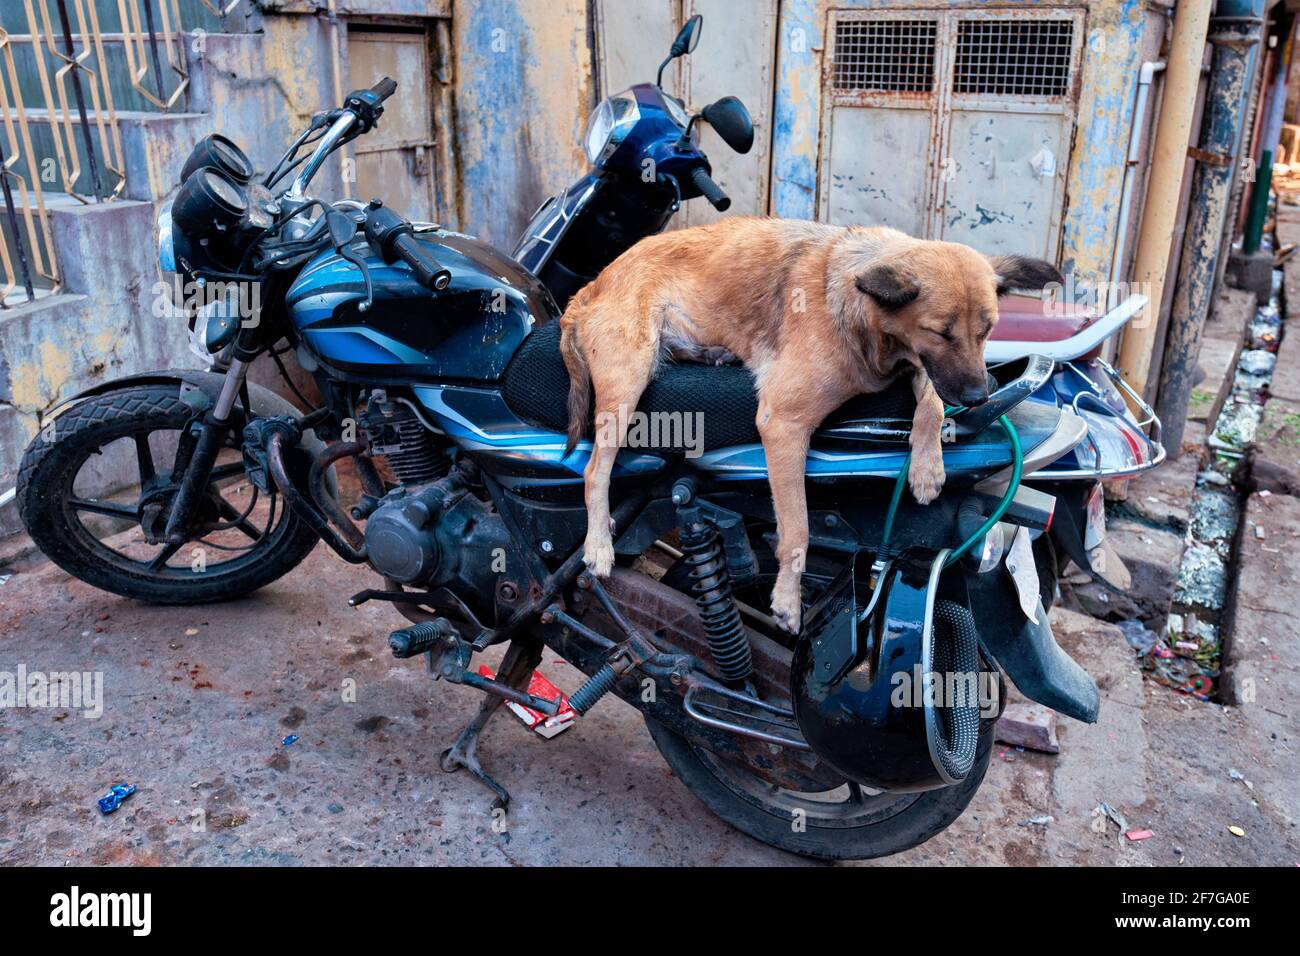 Dog sleeping on motorcycle in indian street Stock Photo